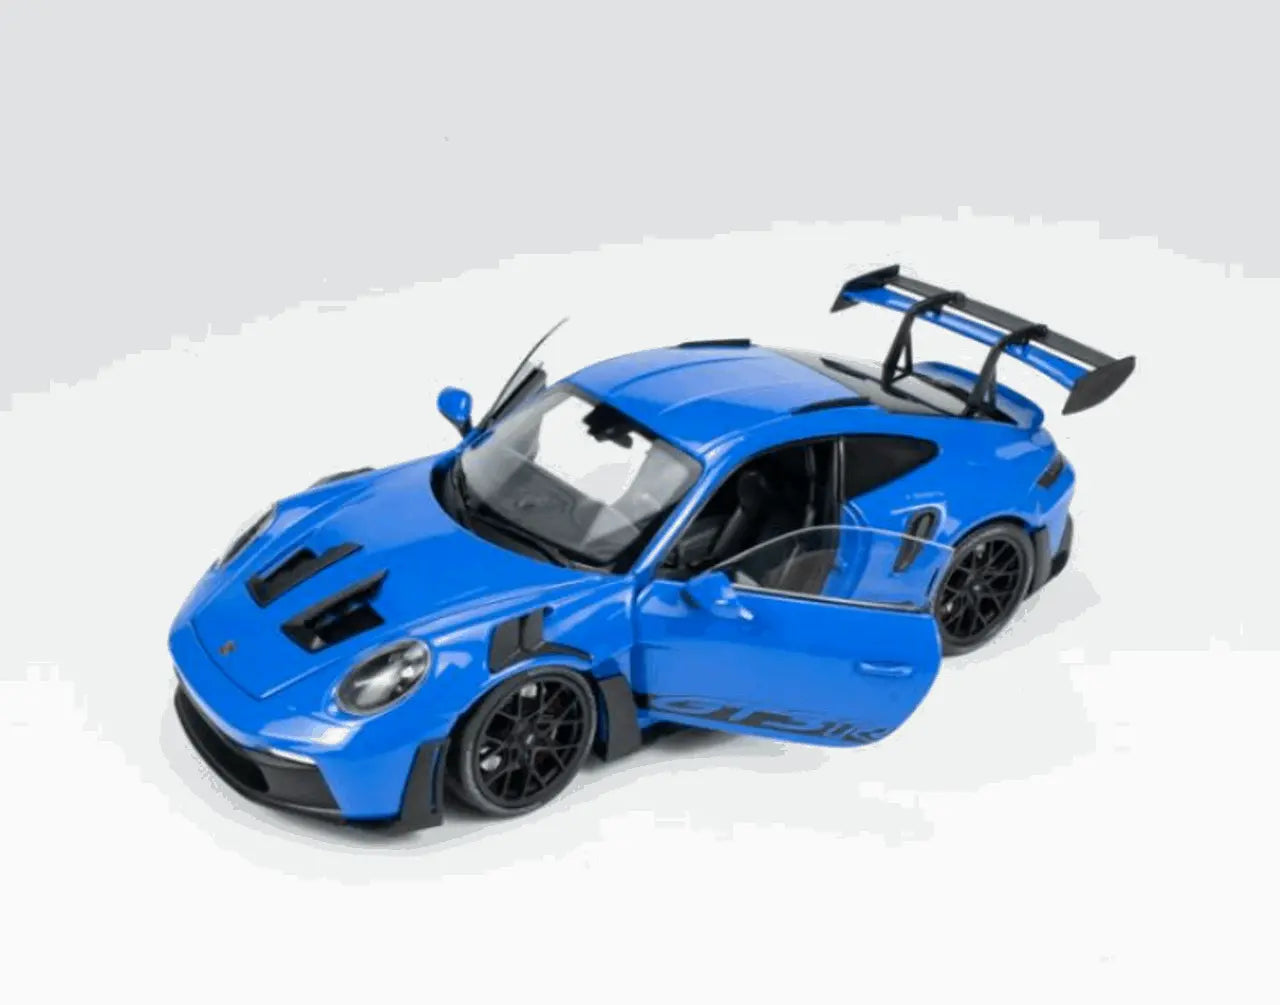 2022 Porsche 911 (992) GT3 RS (Blue with Black Wheels) 1/18 Scale